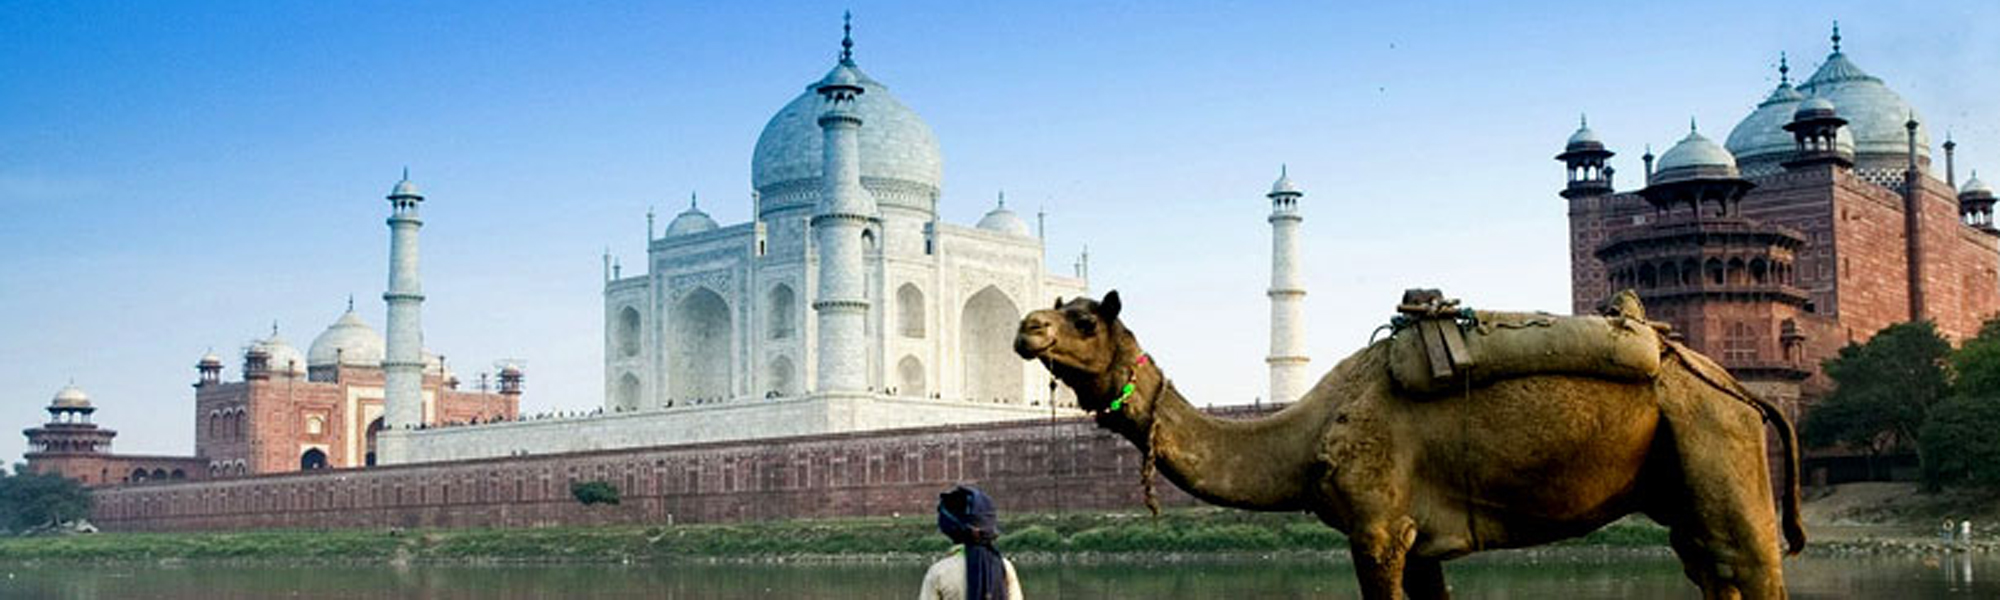 Camel Safari Tours in India with Taj Mahal Tours in India